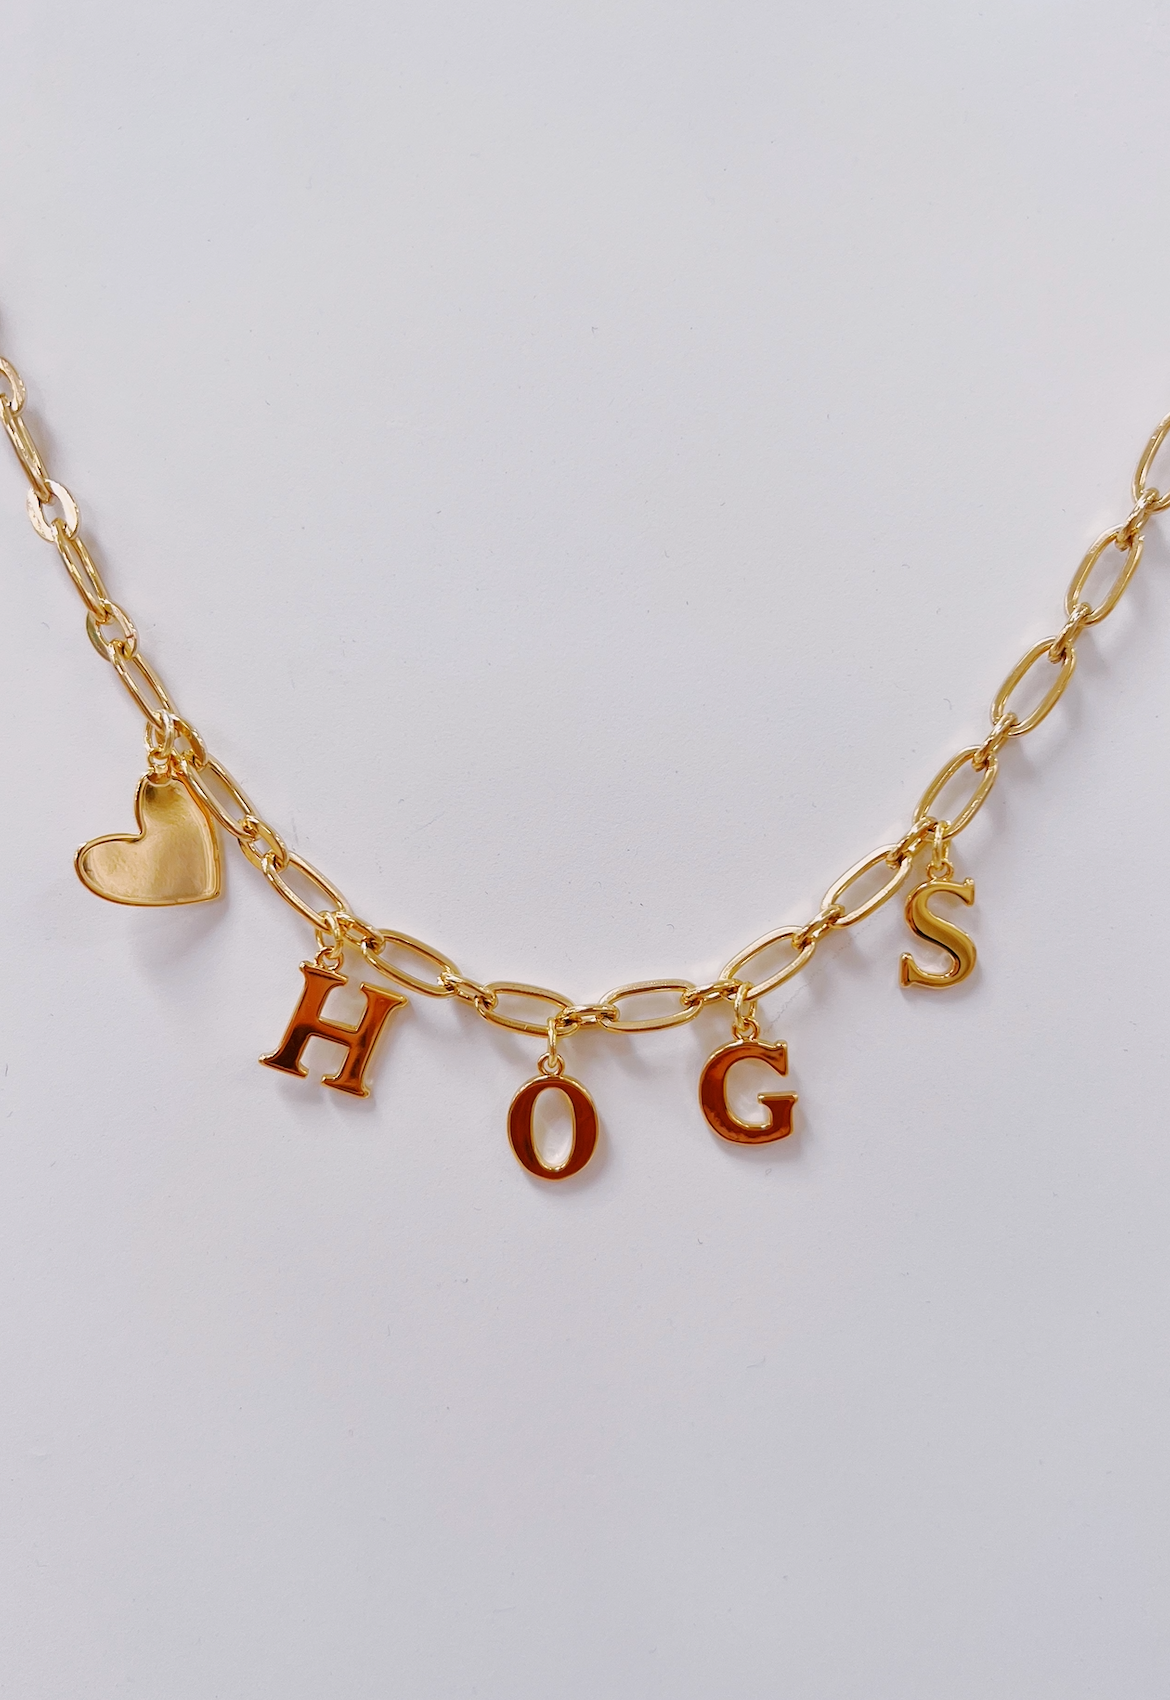 Hogs w/ Heart Necklace